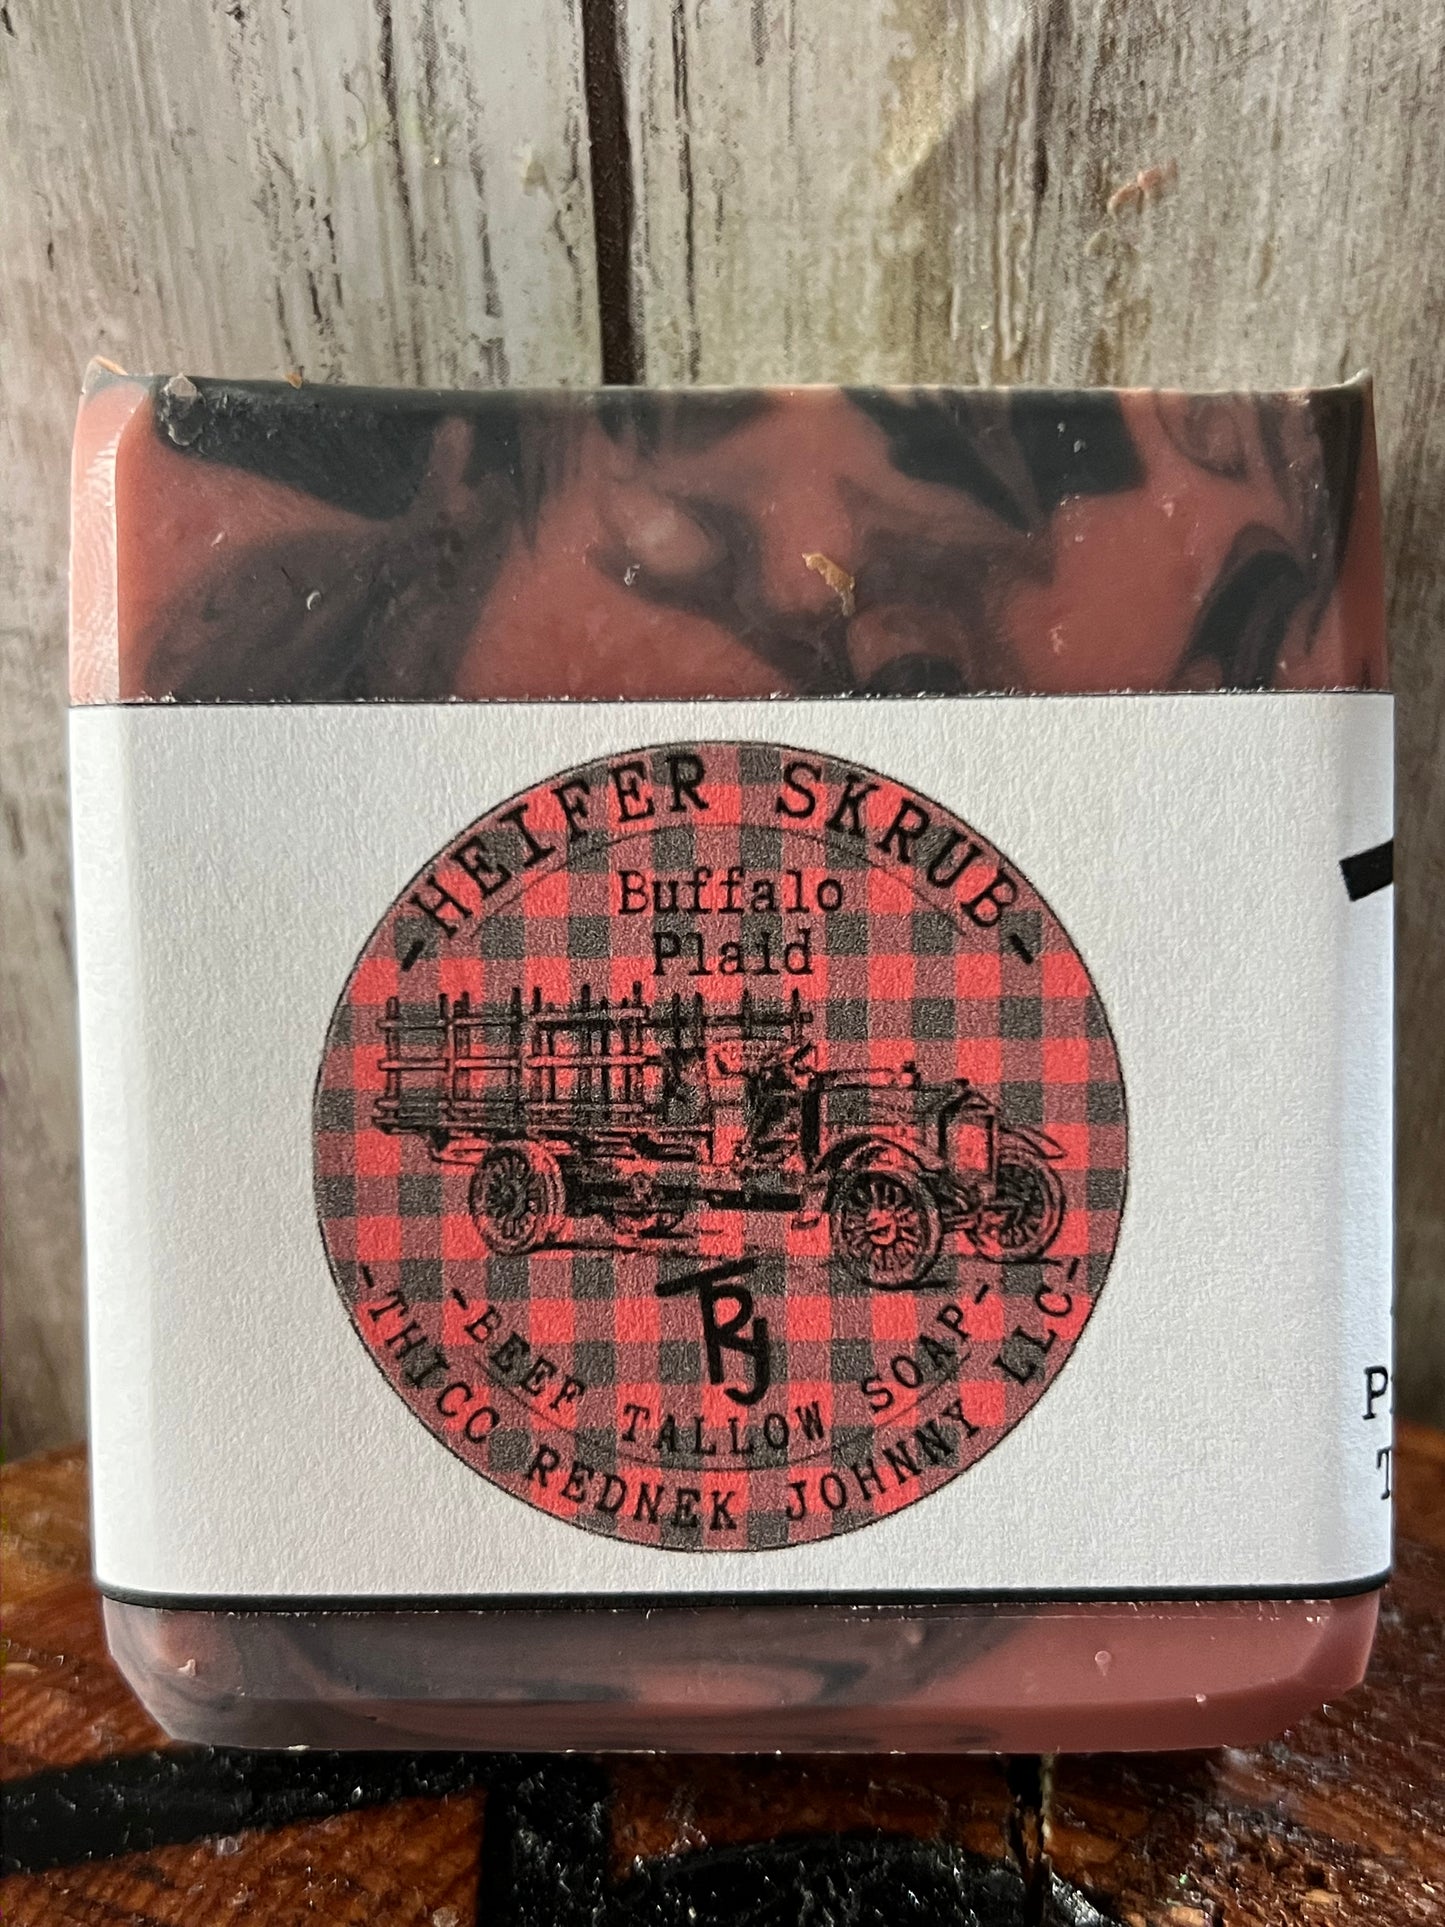 Heifer Skrub Buffalo Plaid (Flannel Type) Handmade Beef Tallow Soap